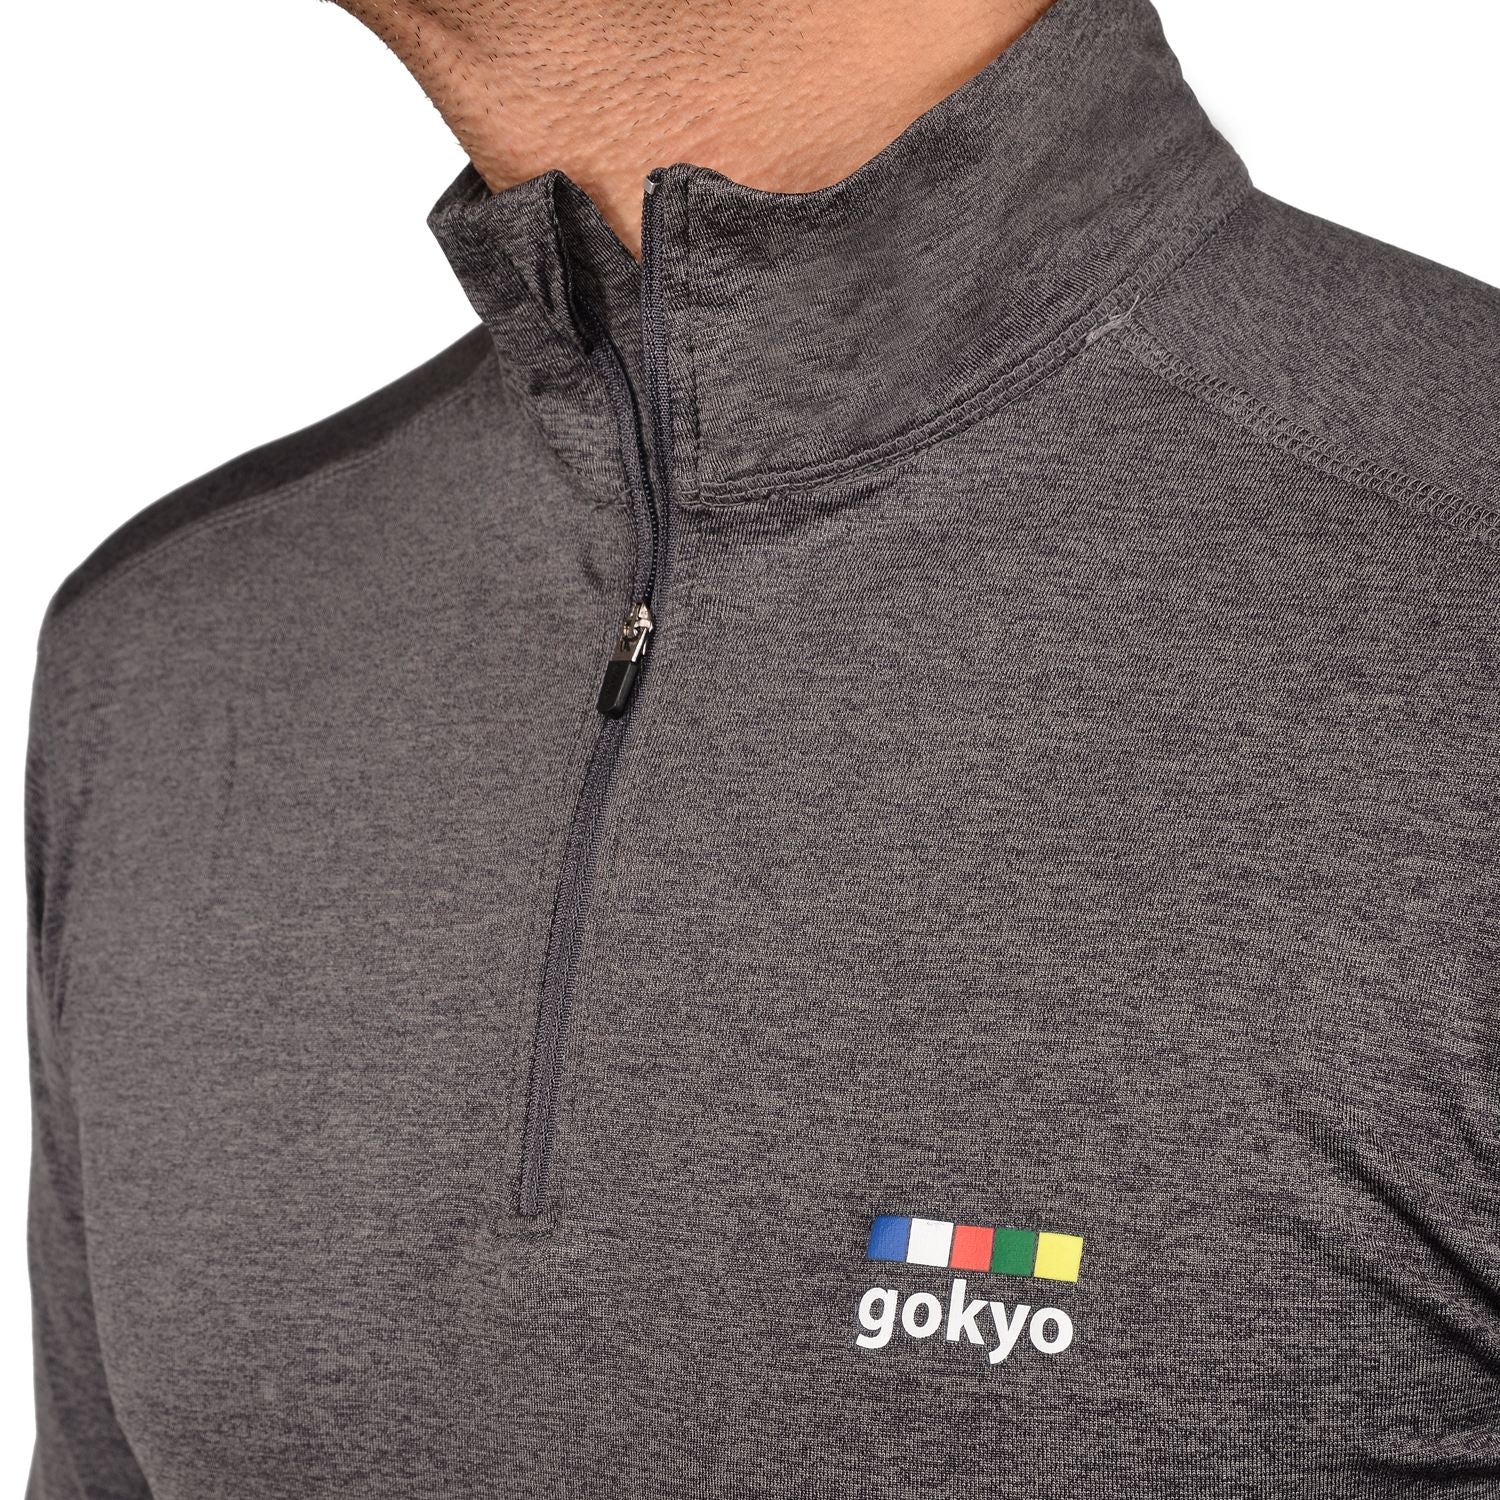 Buy Gokyo Kaza All Season Outdoor & Trekking Tshirt | Trekking & Hiking T-shirts at Gokyo Outdoor Clothing & Gear